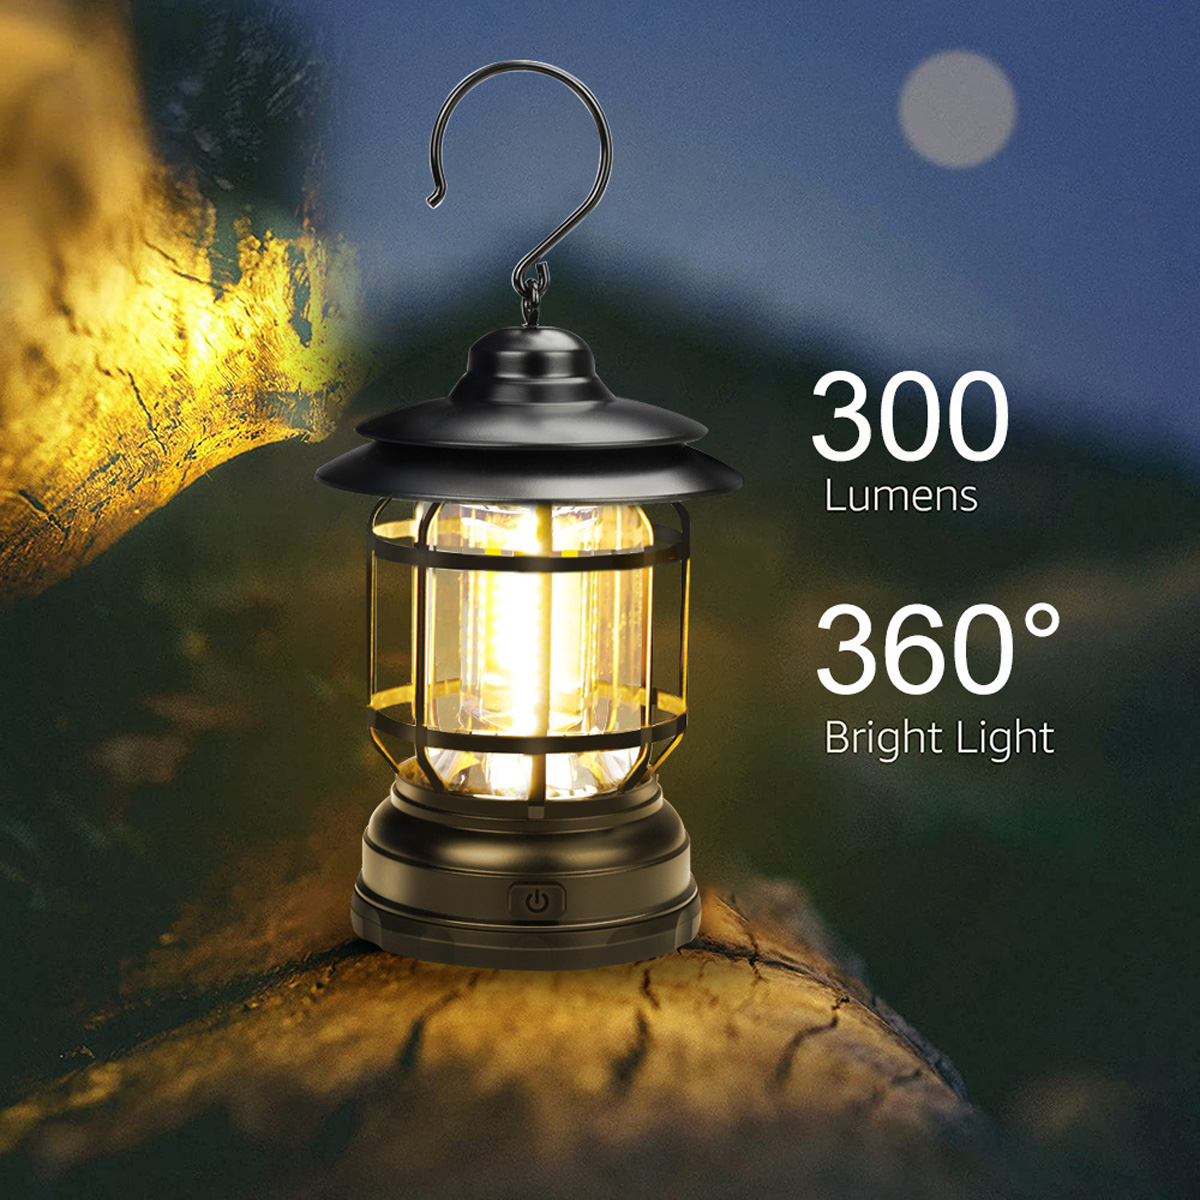 Outdoor-COB-Camping-Lamp-300LM-Retro-Light-Portable-Emergency-Lighting-Tent-Kerosene-Lantern-For-Hik-1930684-3